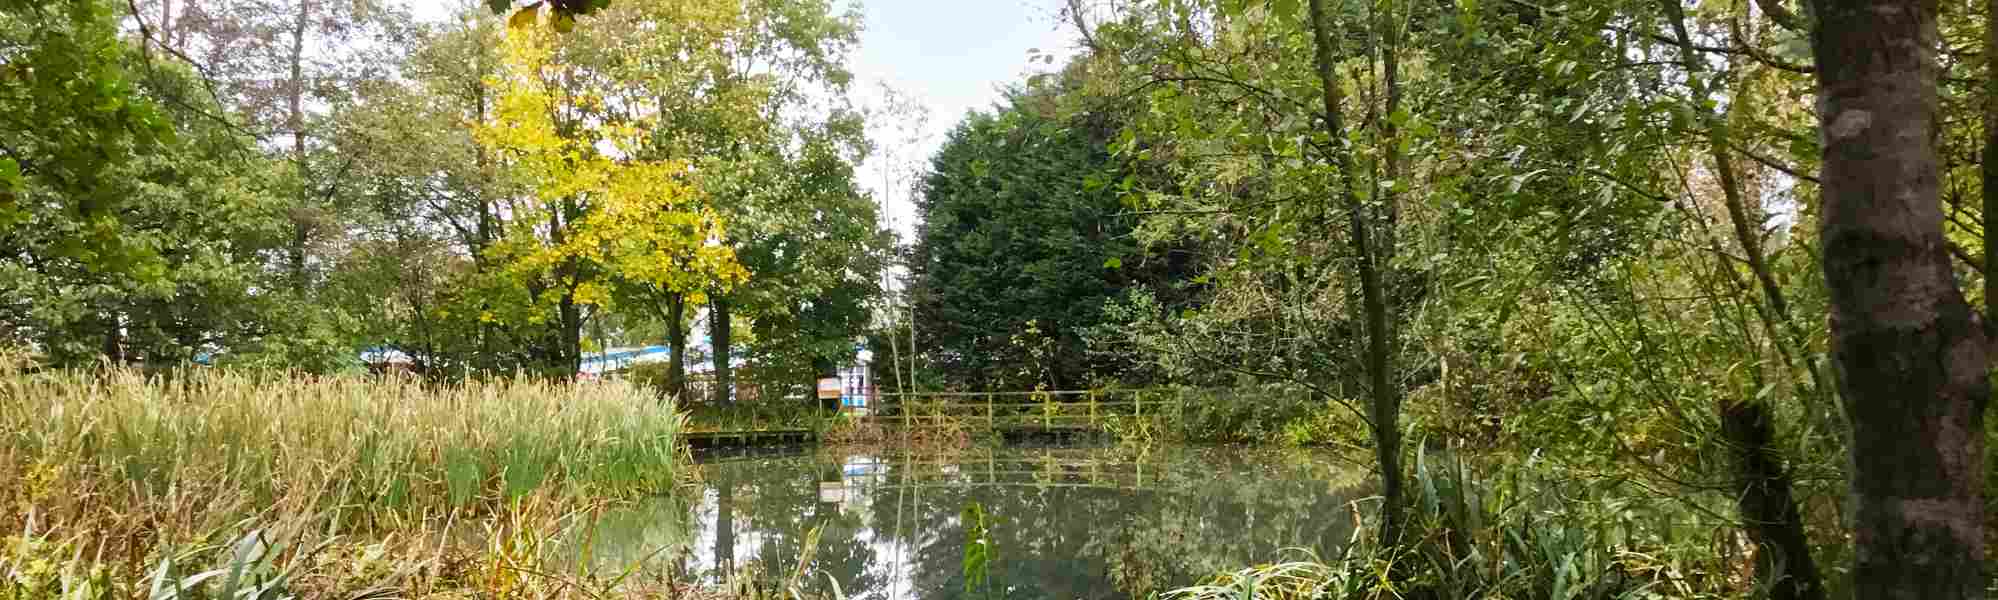 Chantlers Primary School forest school pond